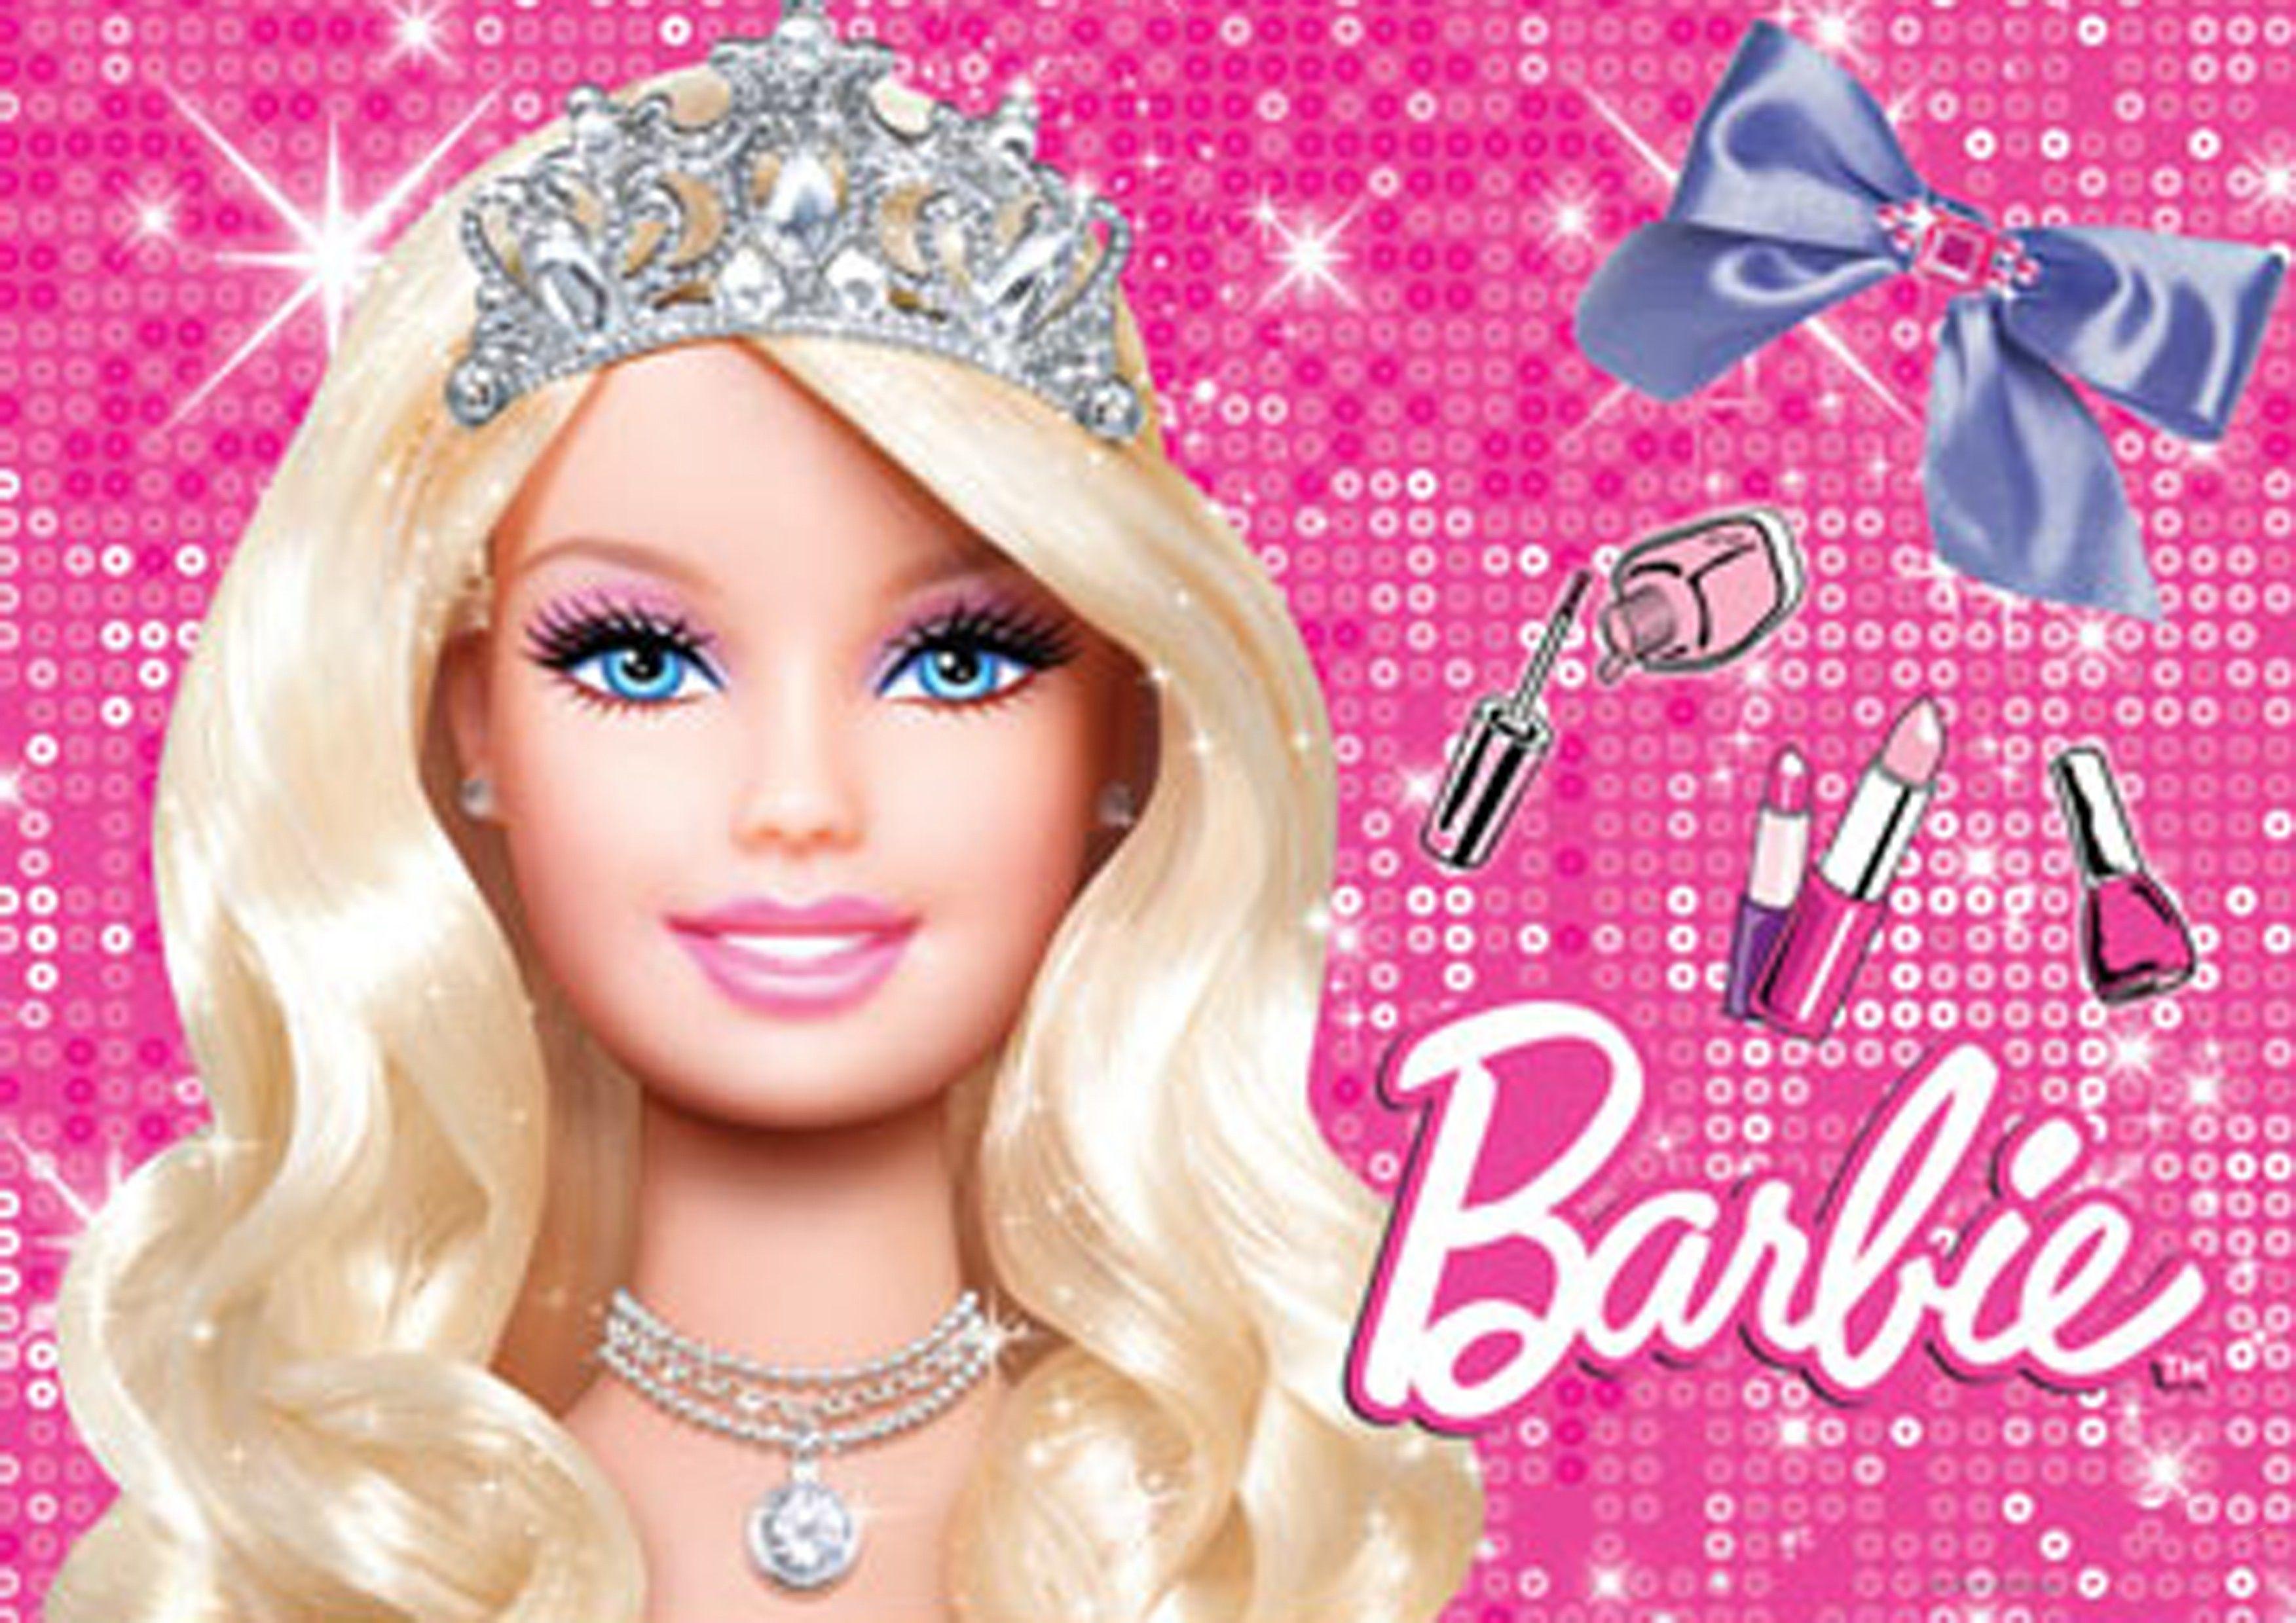 Wallpaper Barbie Wallpaper Barbie Background